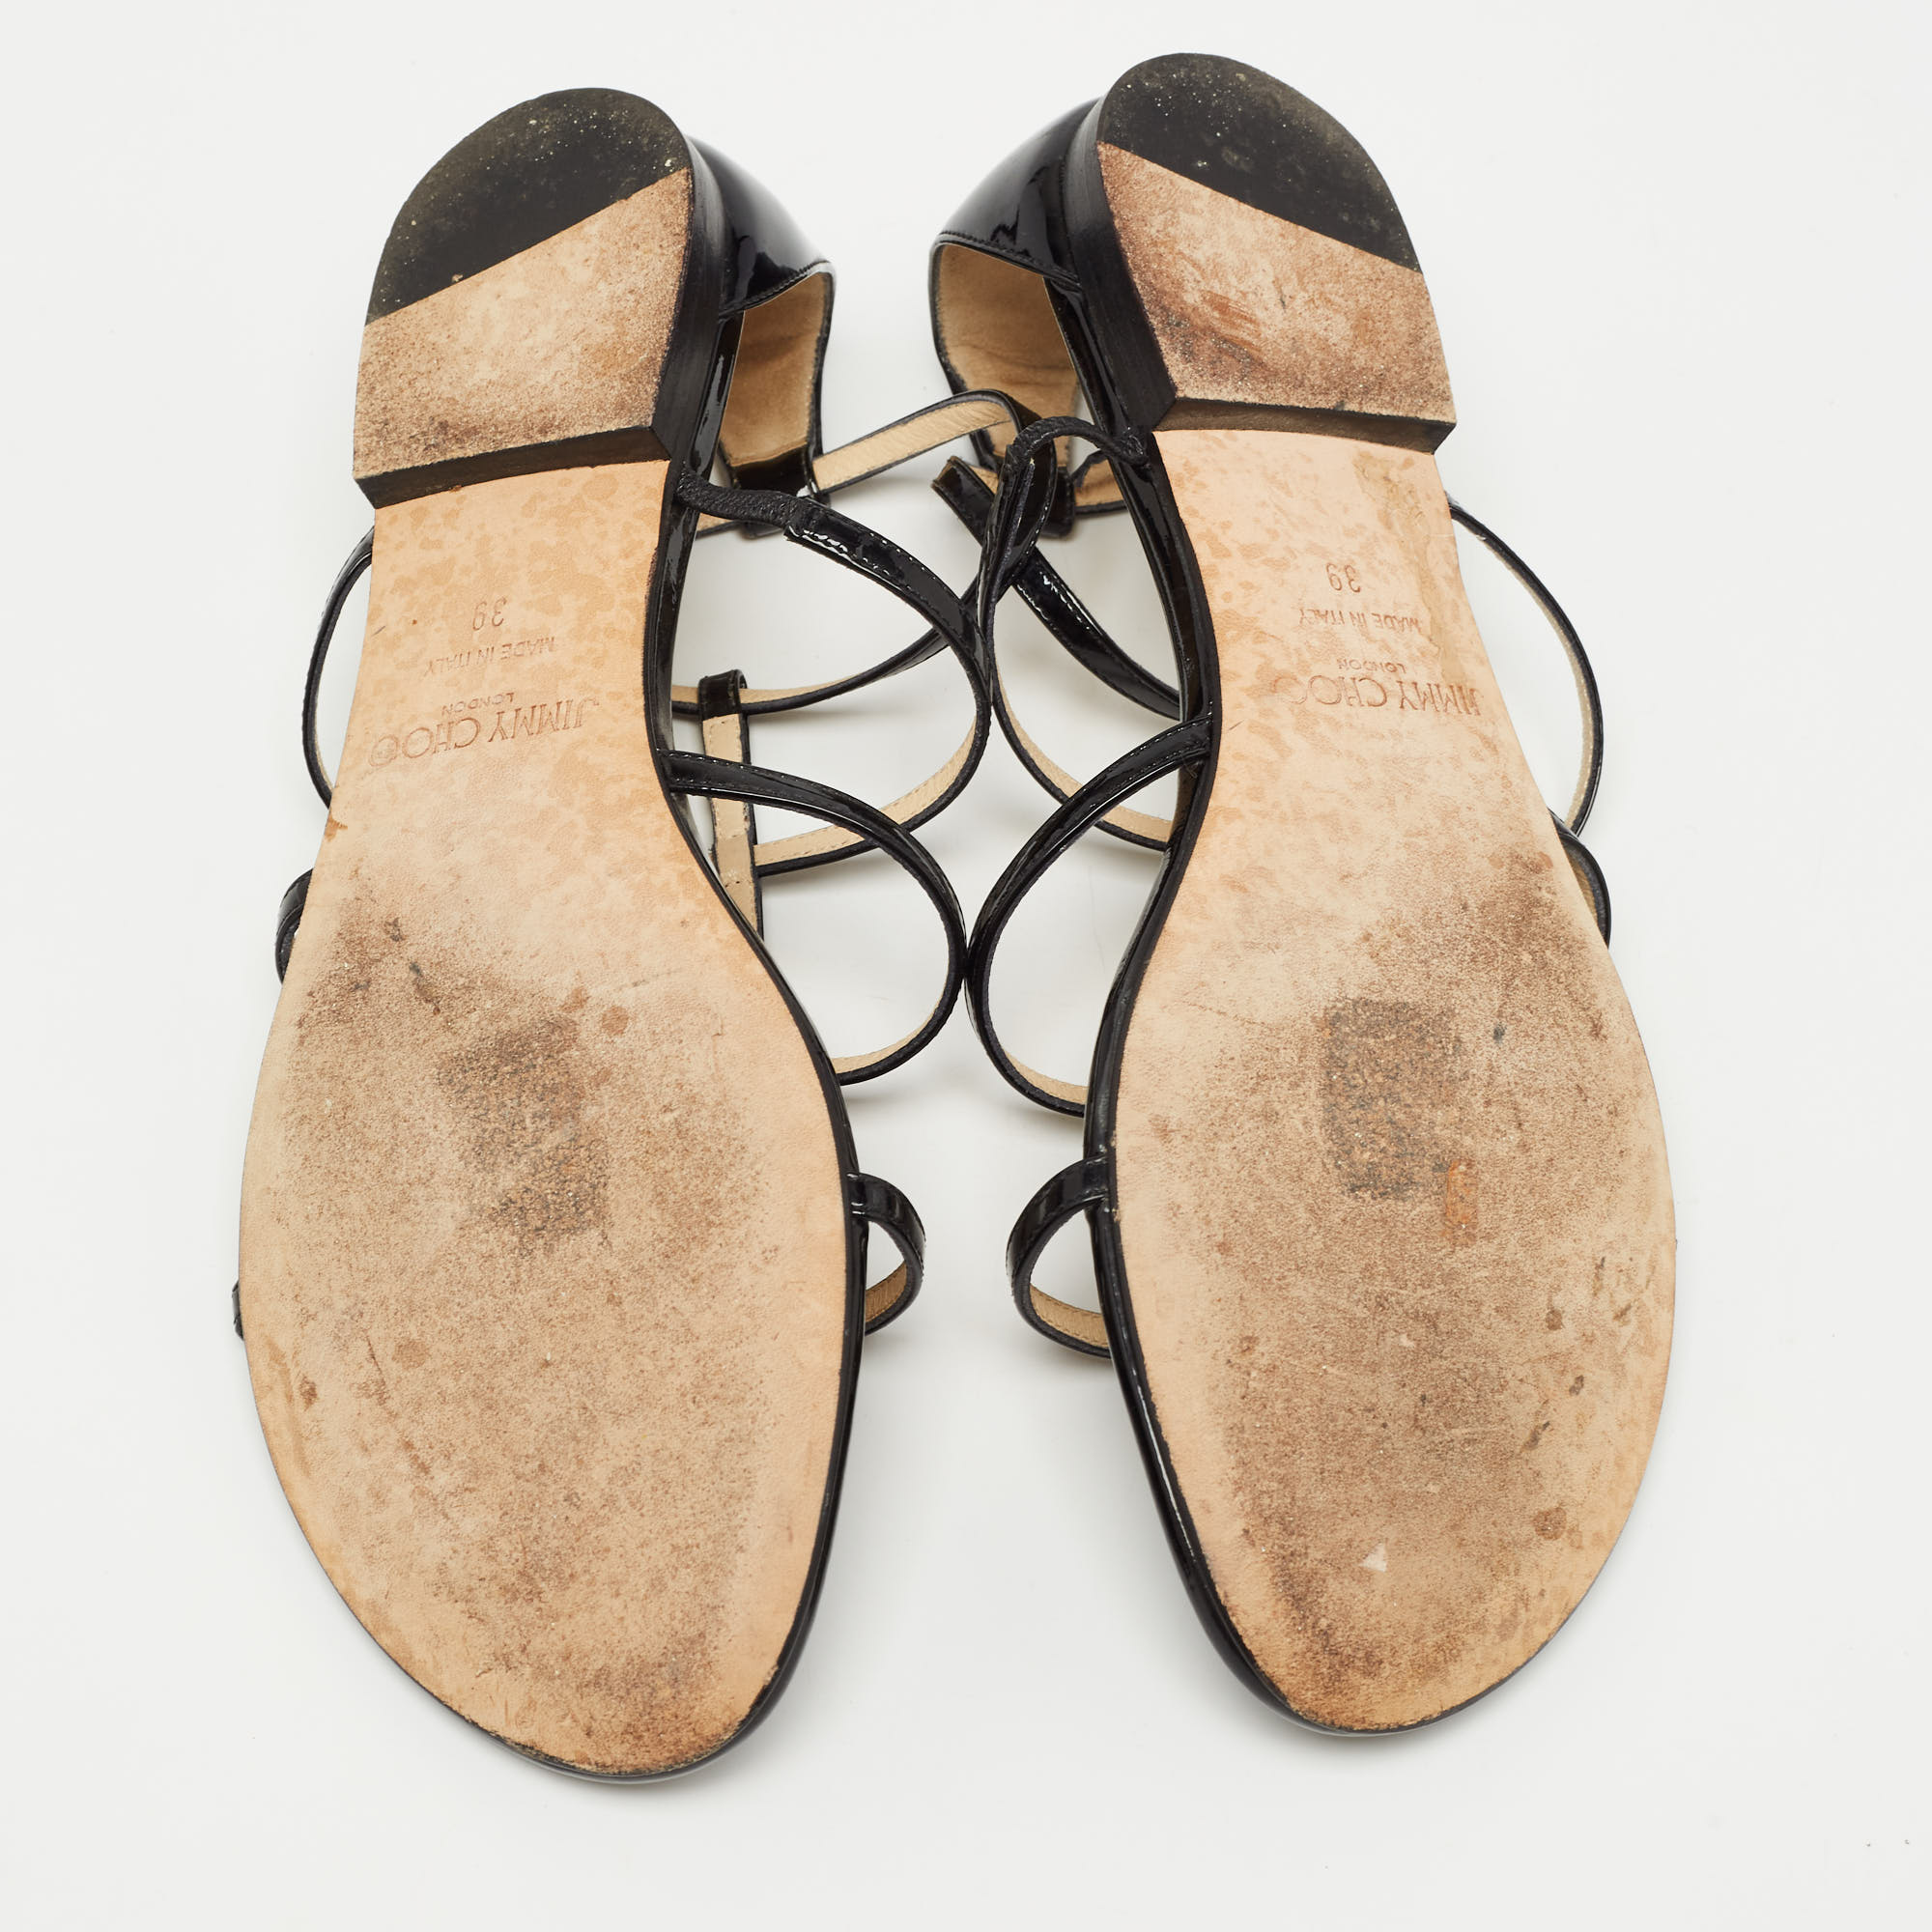 Jimmy Choo Black Patent Strappy Flat Sandals Size 39